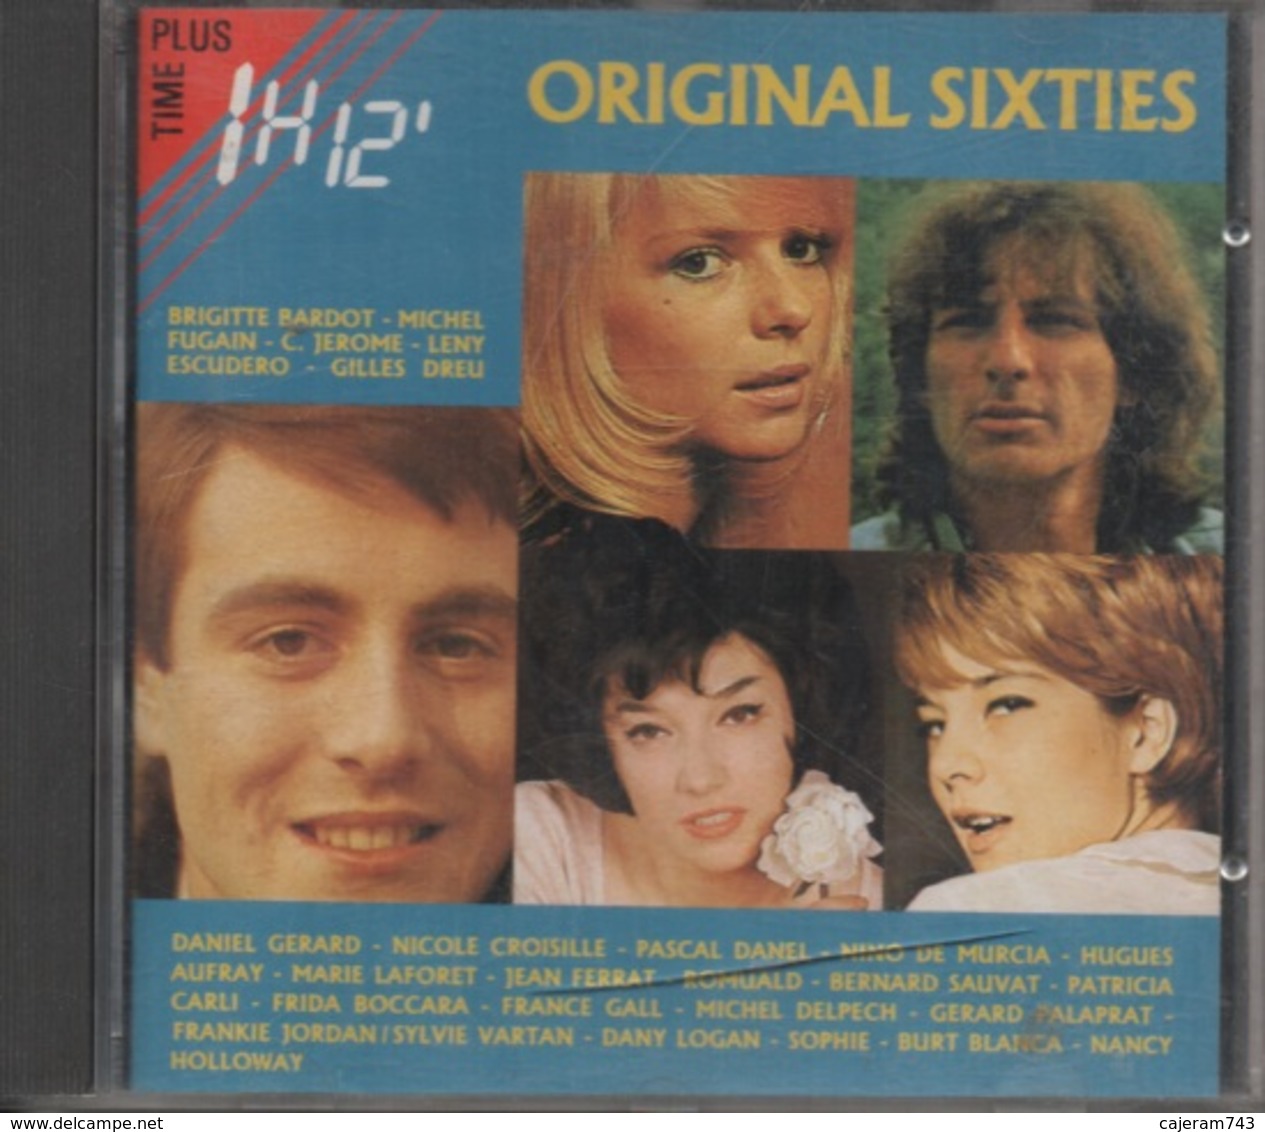 CD. ORIGINAL SIXTIES. Brigitte BARDOT - ROMUALD - France GALL - Dany LOGAN - Sylvie VARTAN - Leny ESCUDERO - Jean FERRAT - Compilations